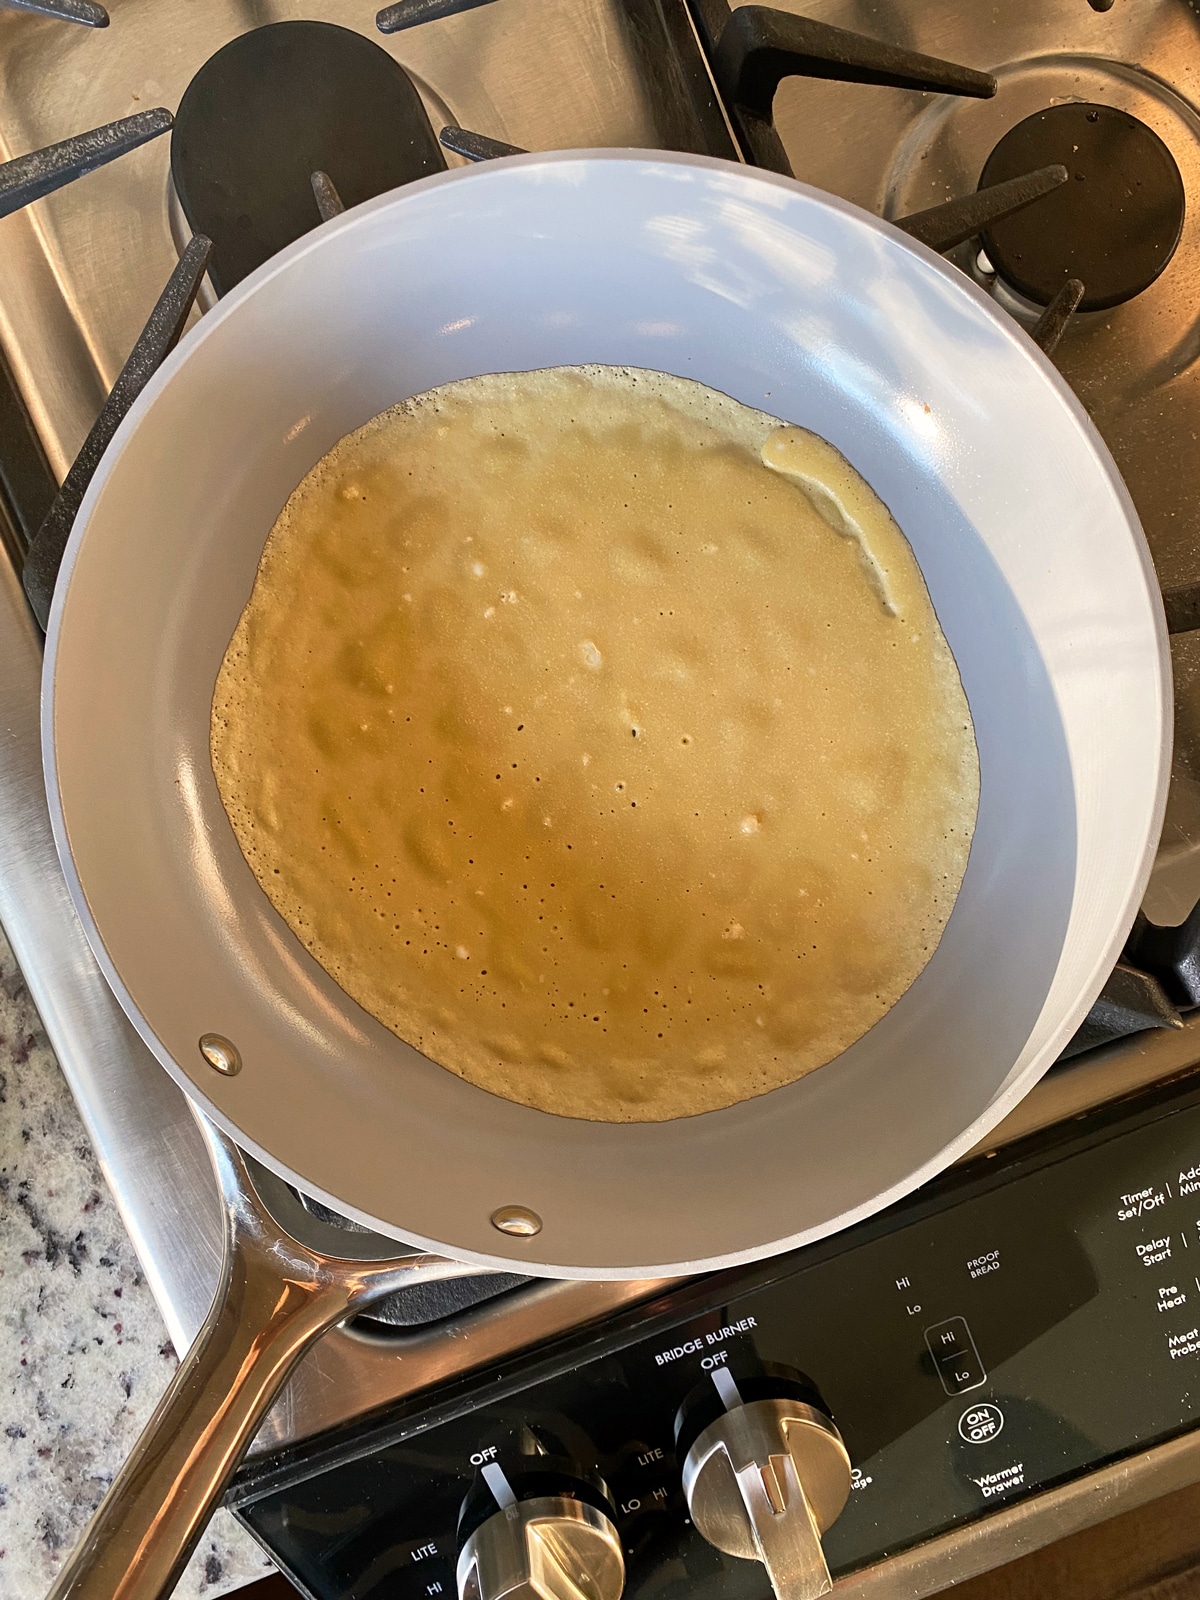 cooking crepe on ceramic frying pan